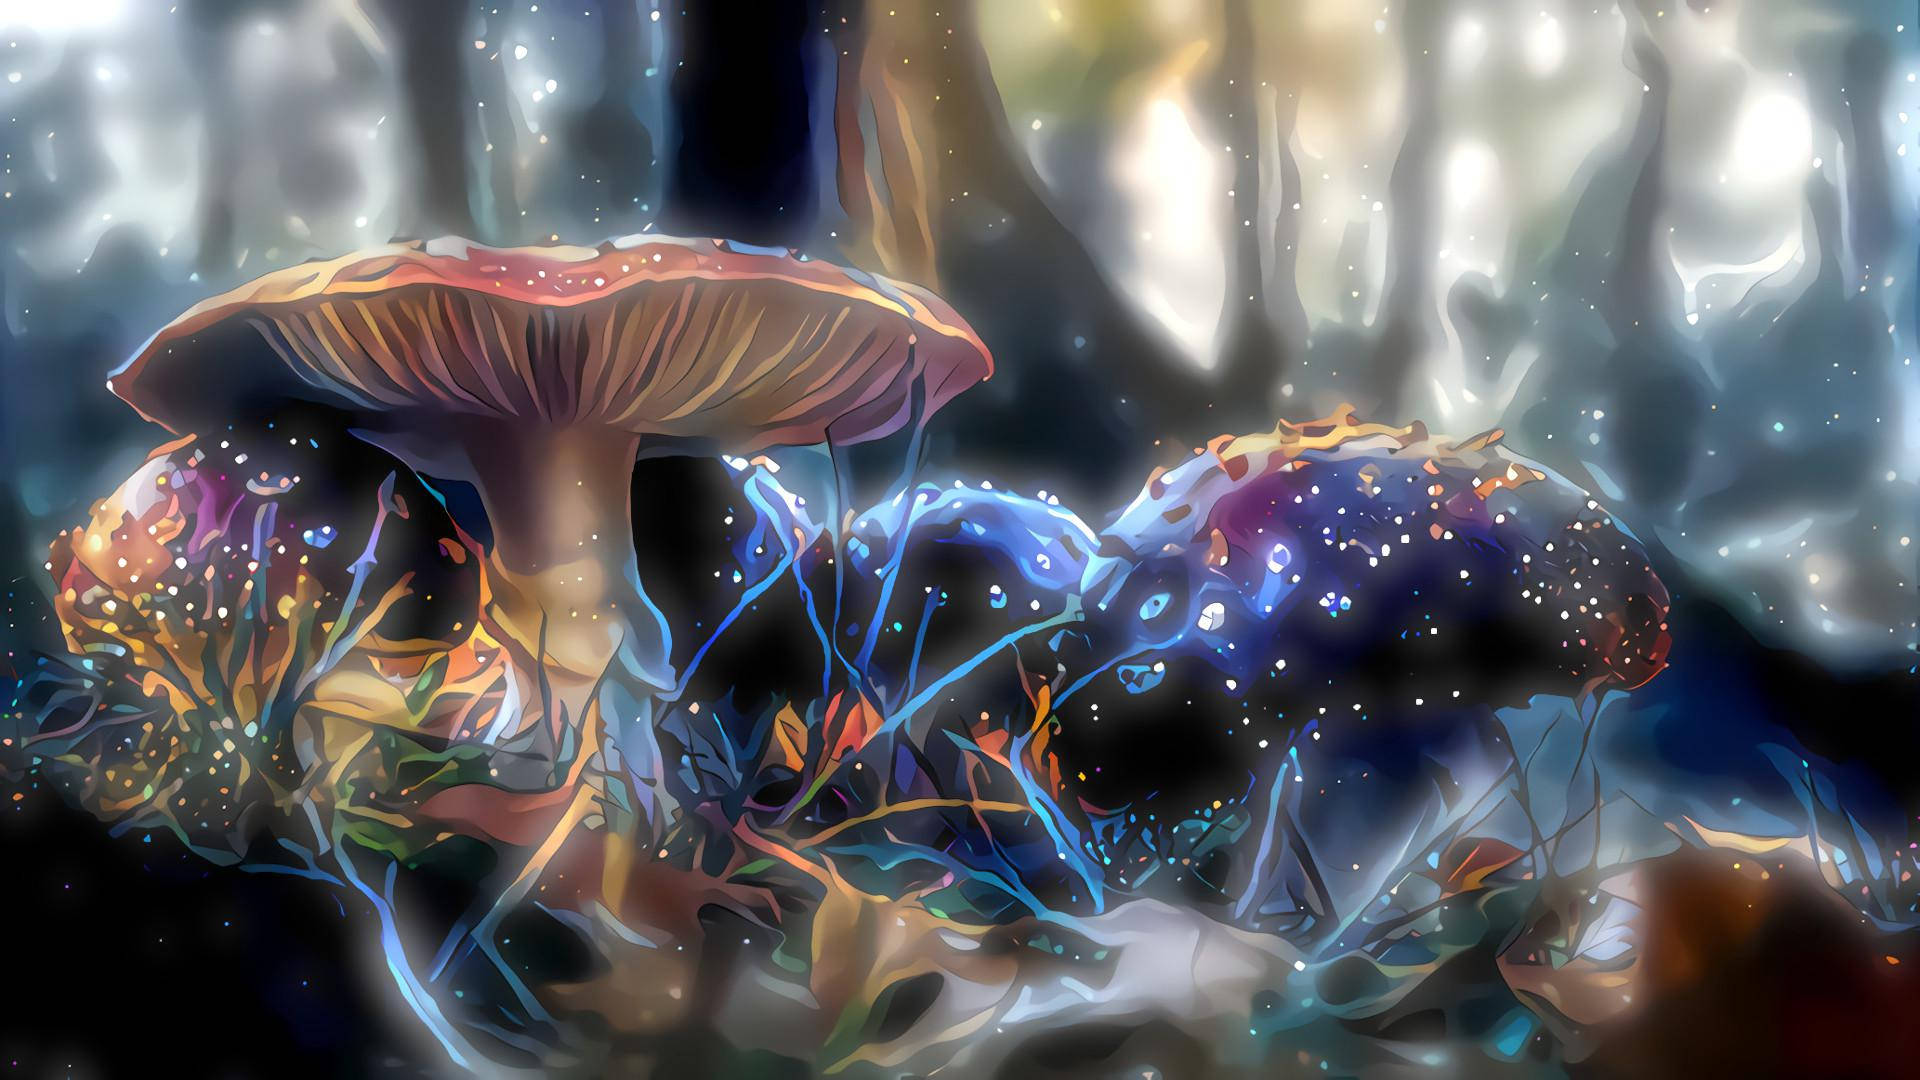 Enchanted Mushroom Aesthetic Wallpaper